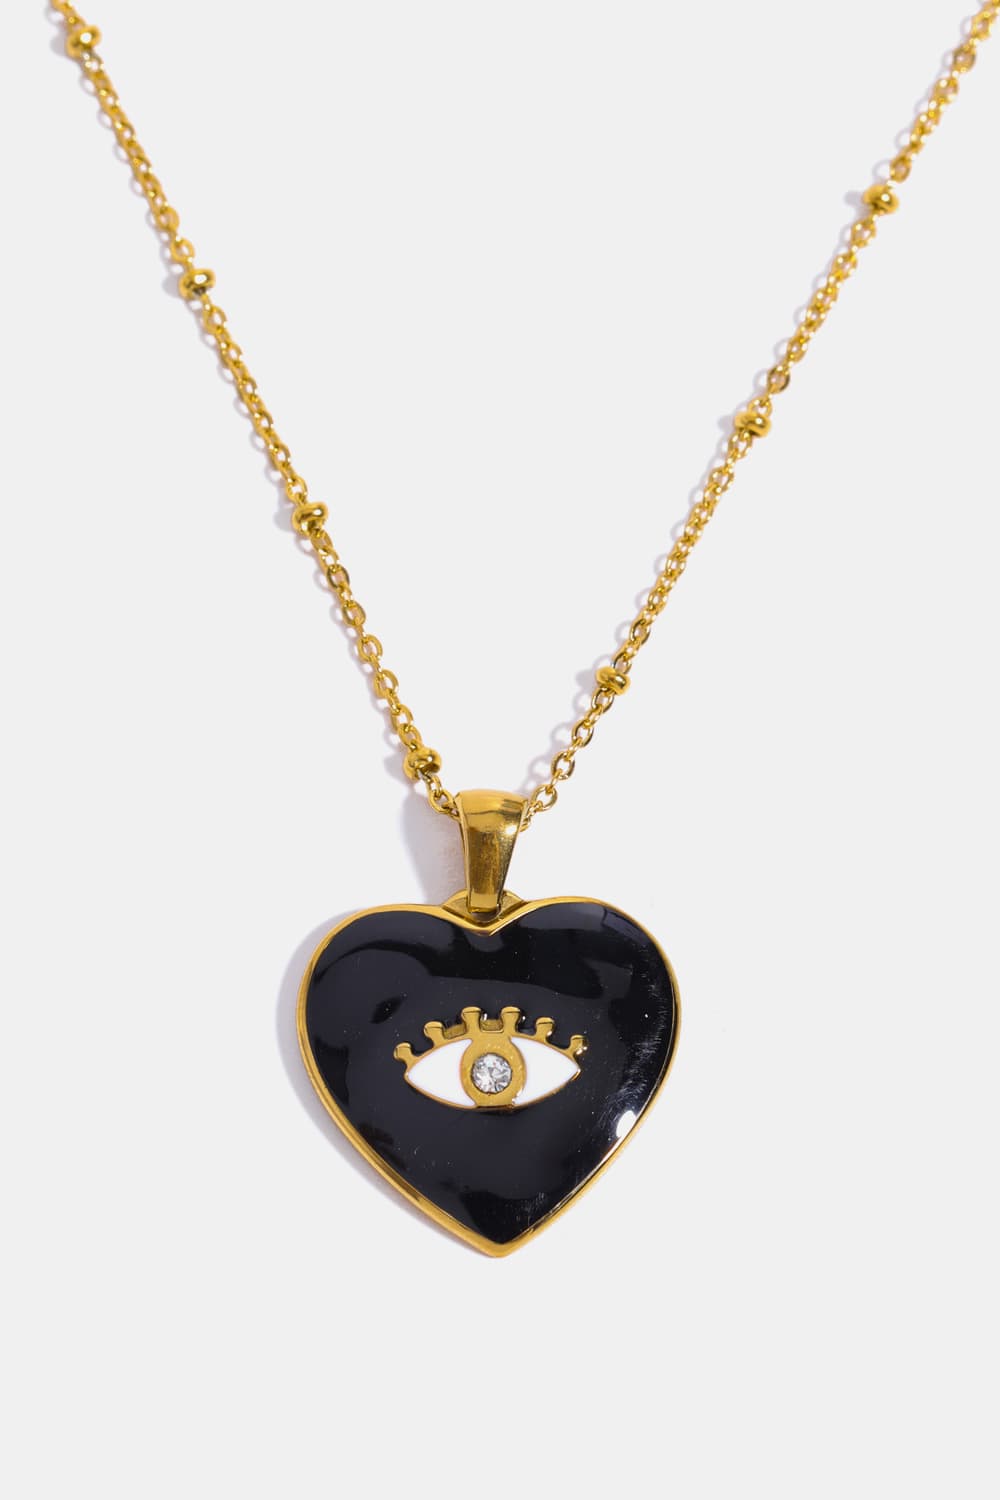 Heart & Evil Eye Shape 18K Gold Plated Pendant Necklace - AllIn Computer